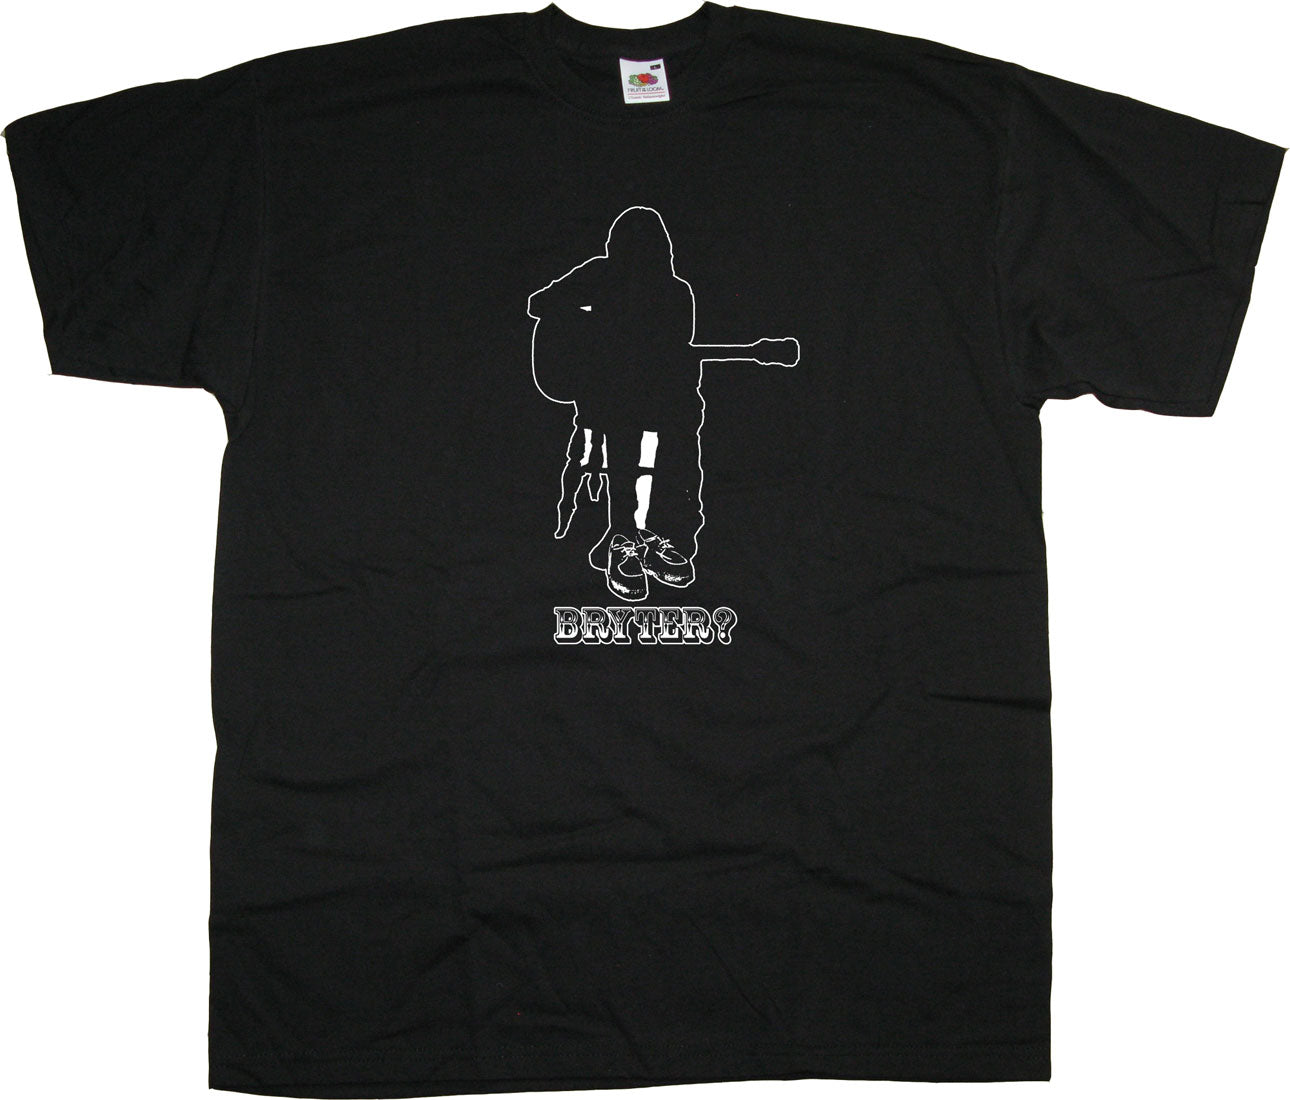 Nick Drake T shirt - Montage  Folk T shirts from Old Skool Hooligans